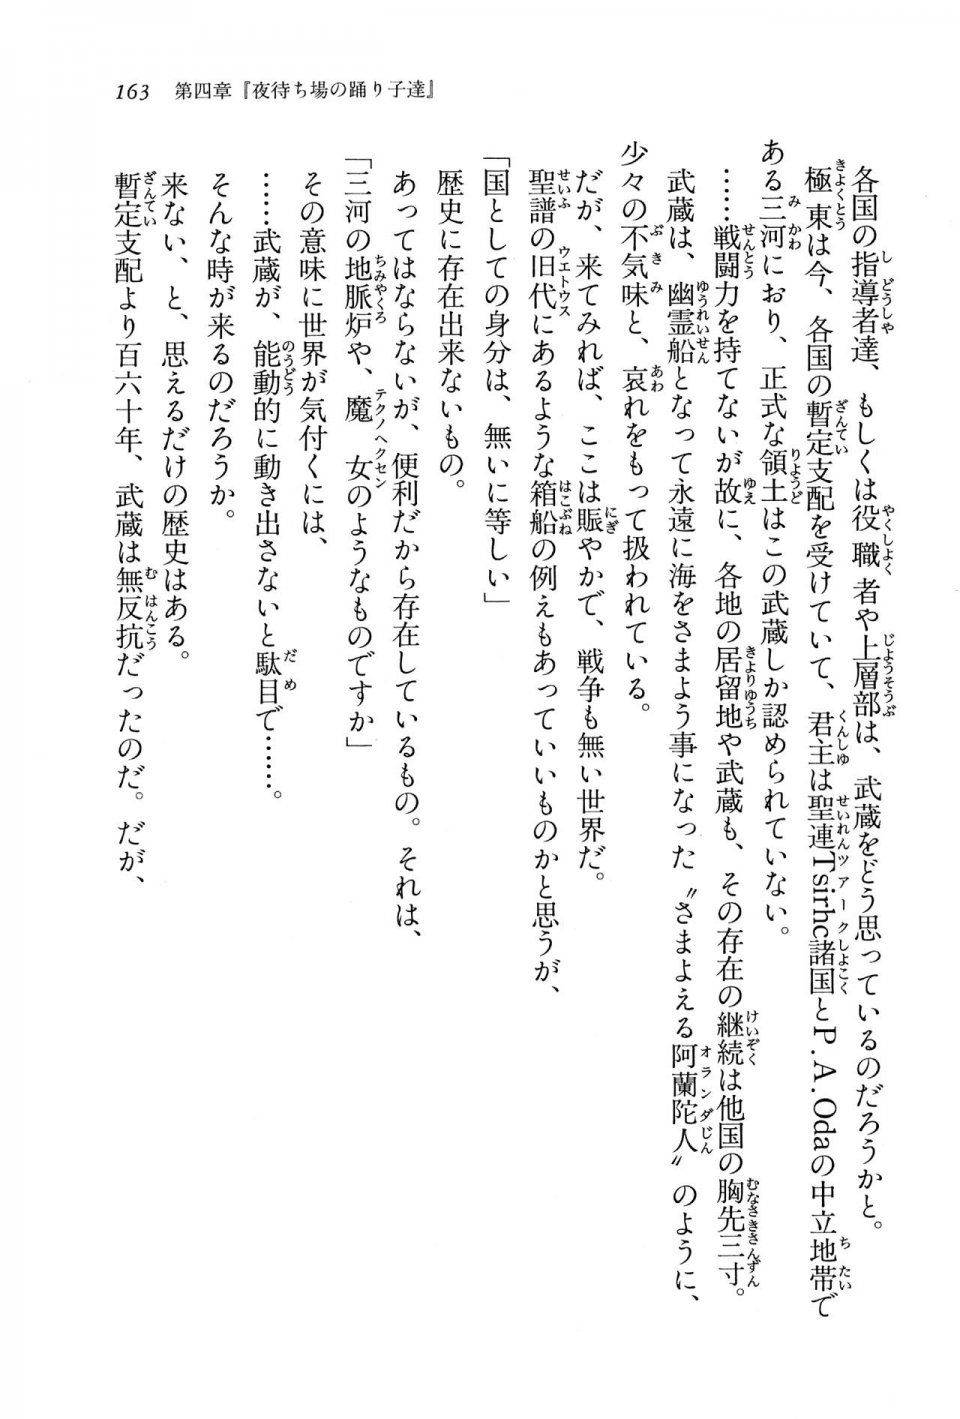 Kyoukai Senjou no Horizon BD Special Mininovel Vol 7(4A) - Photo #167